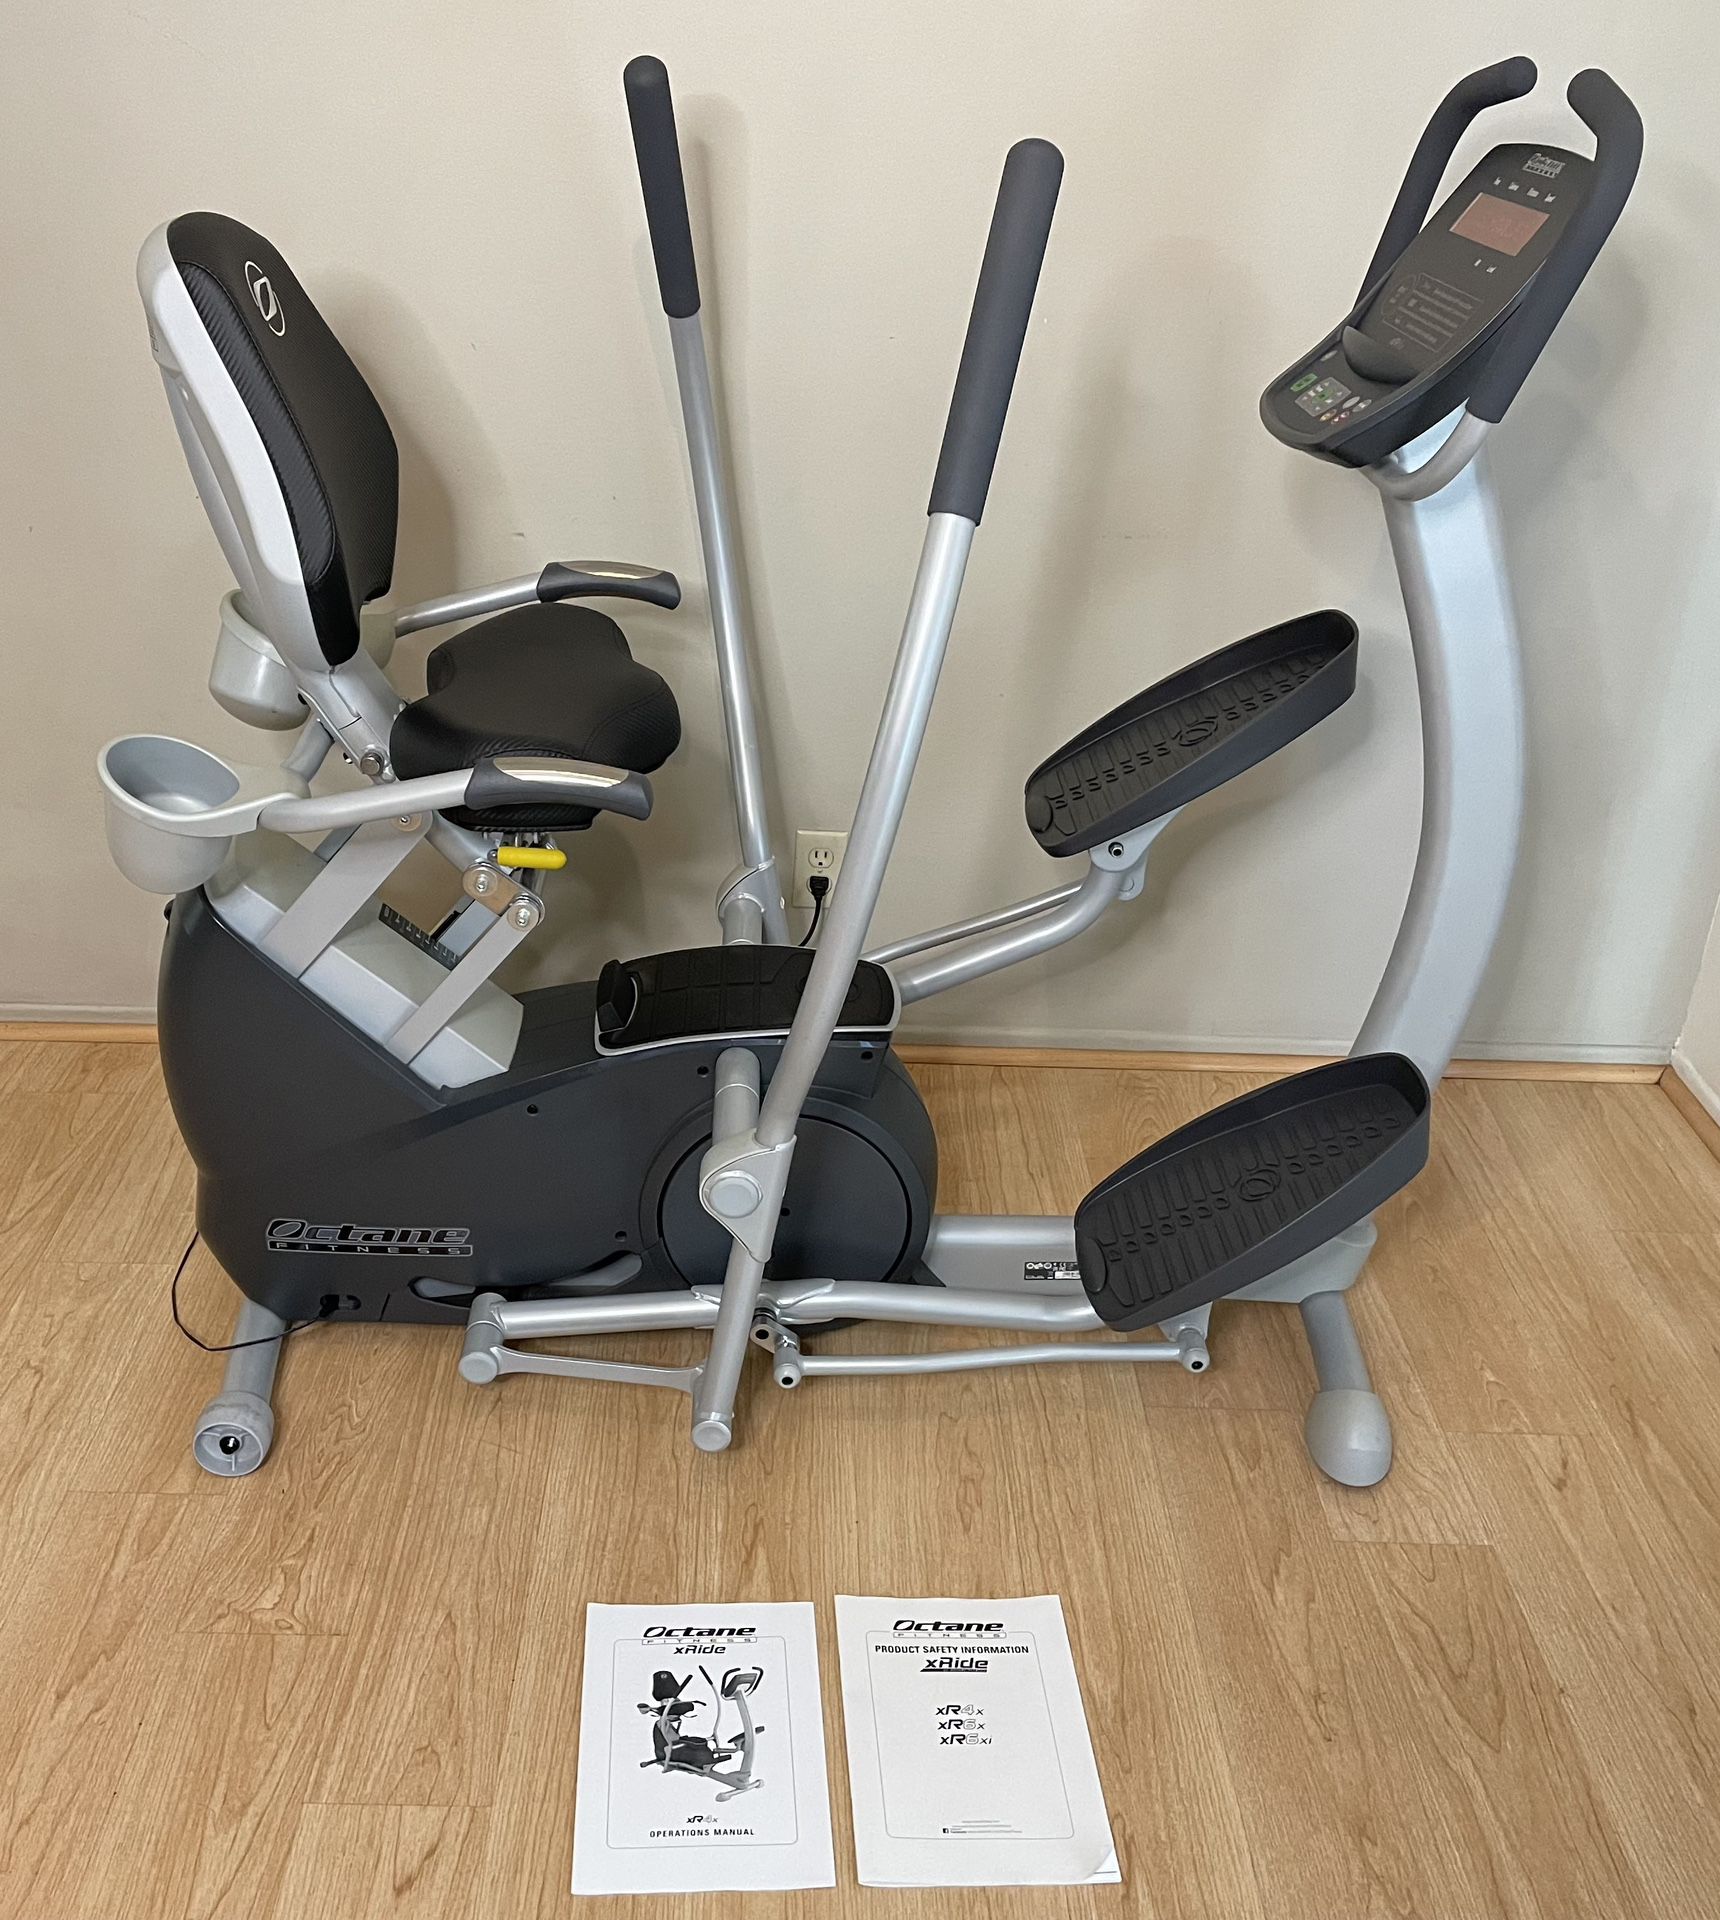 Octane Fitness XR4x Recumbent Seated Elliptical Rehabilitation Trainer Exercise Workout Machine